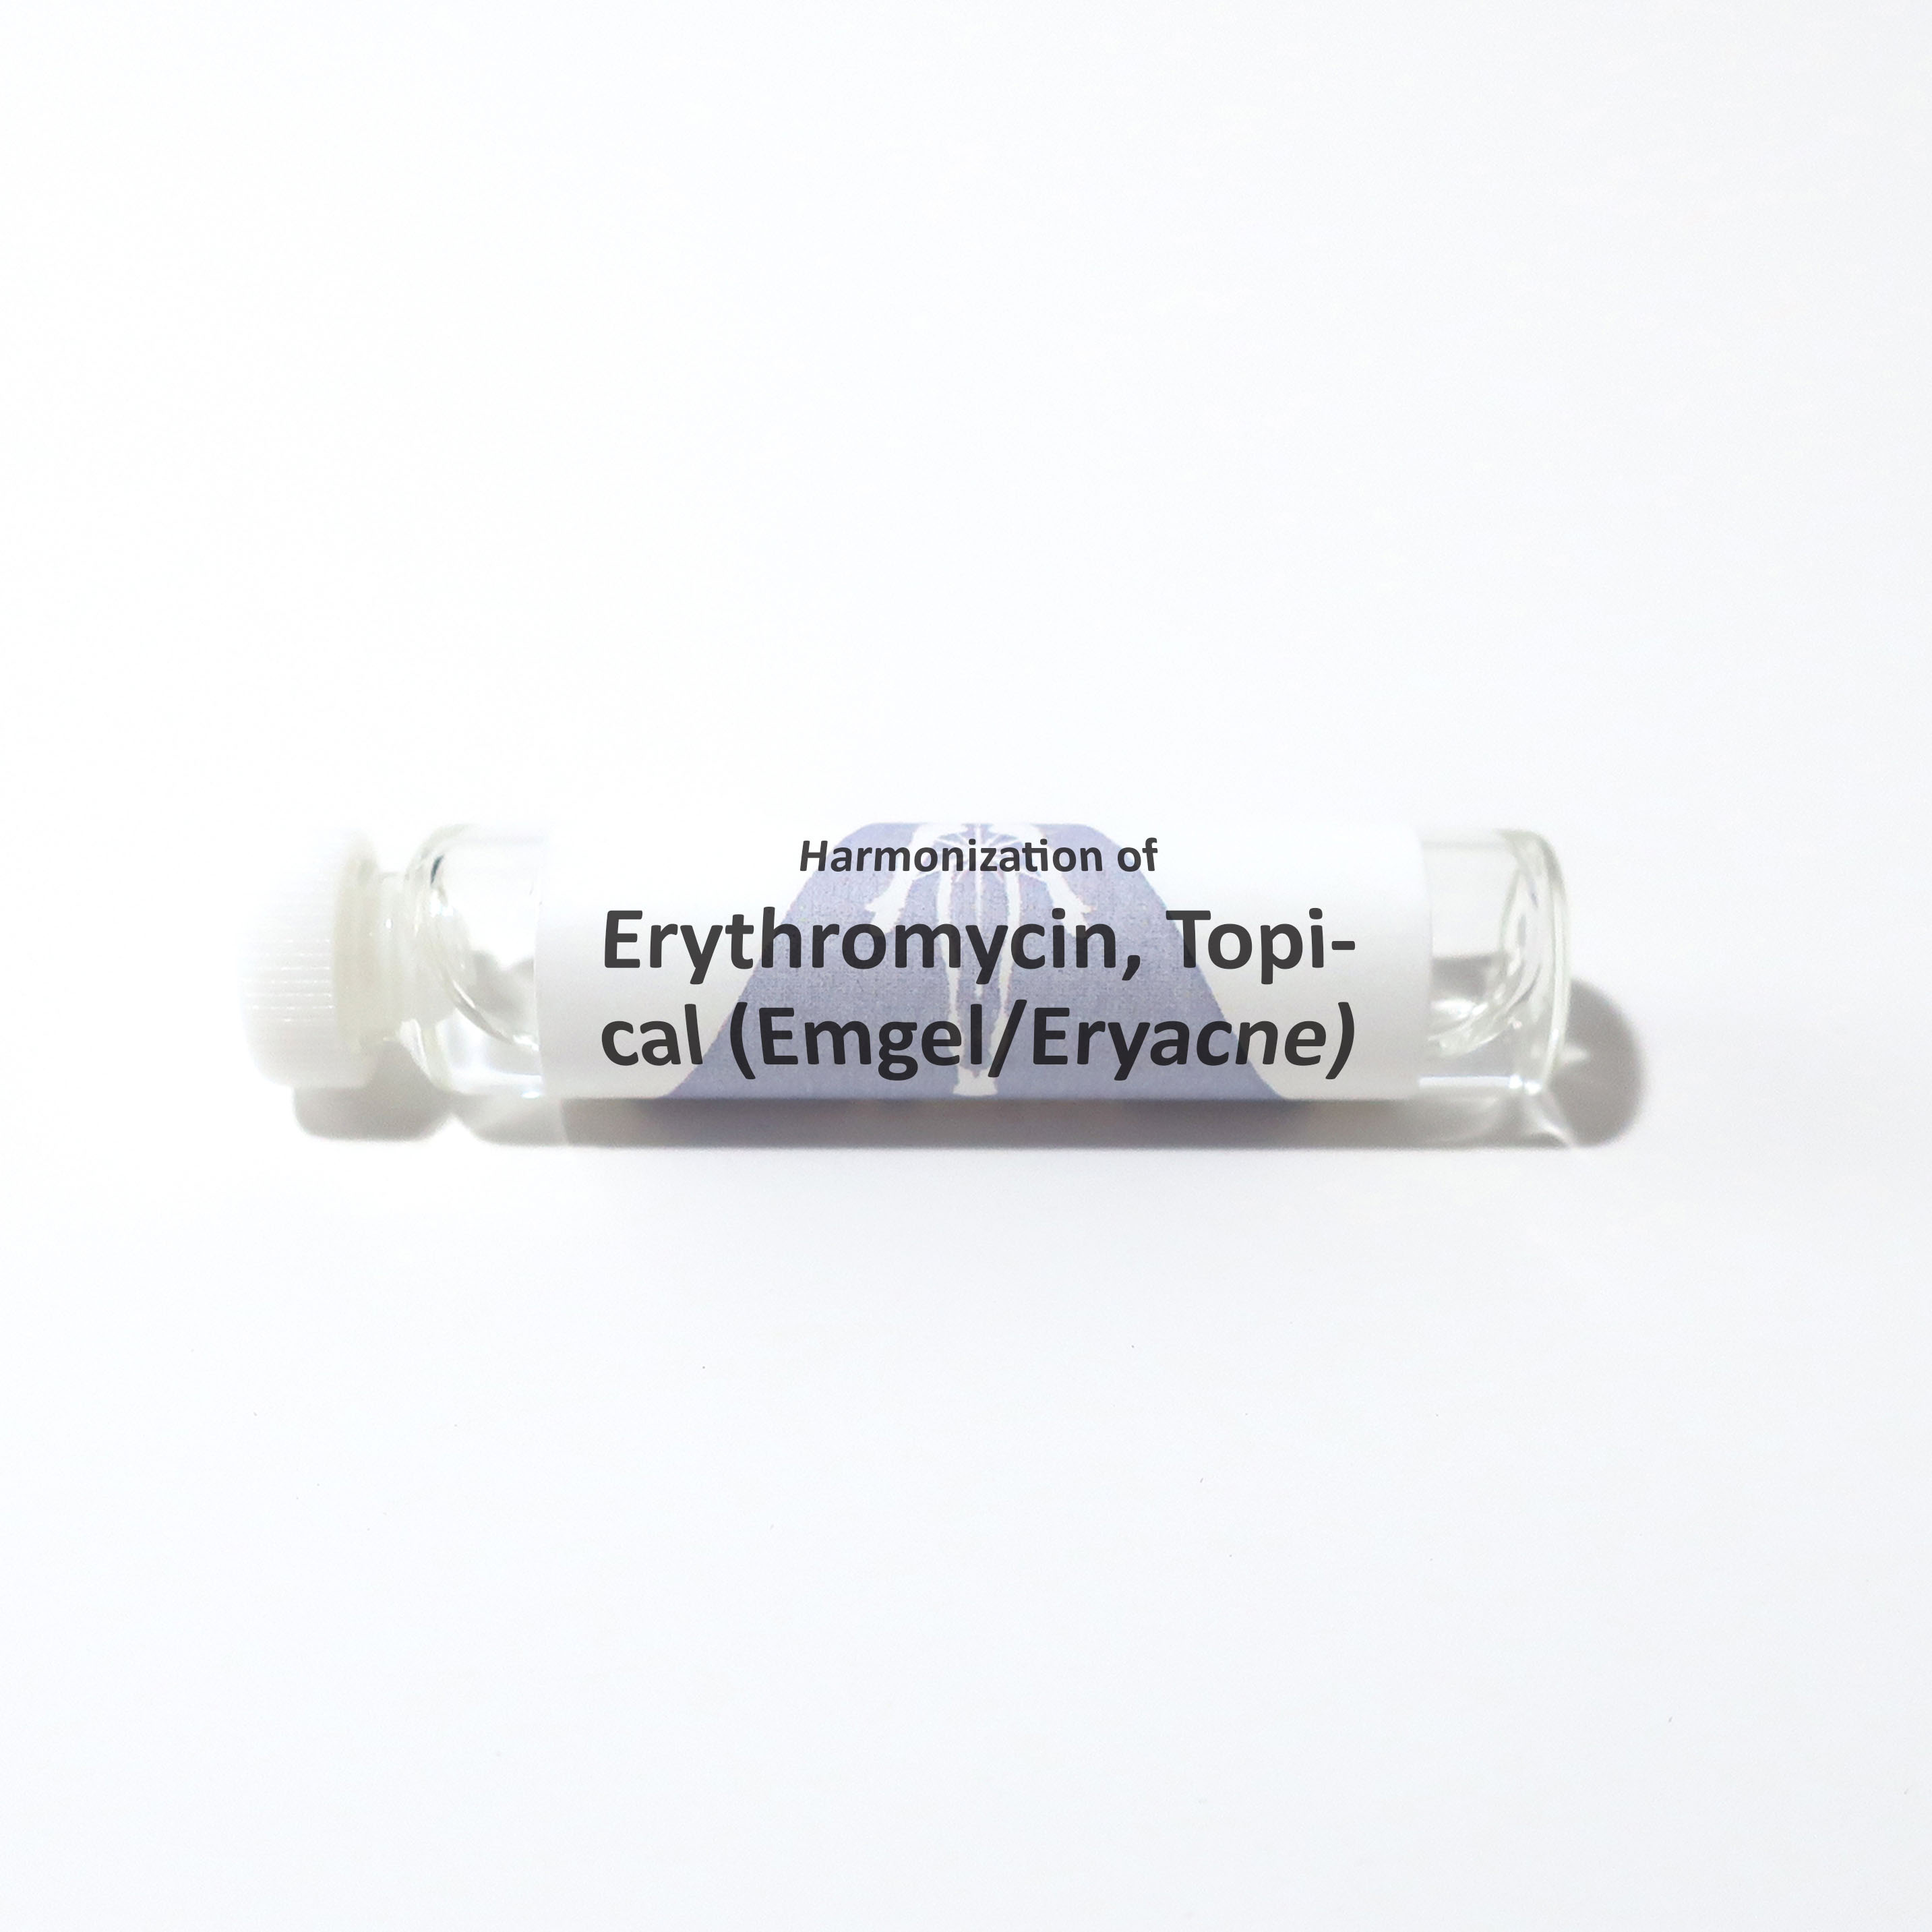 Erythromycin, Topical (Emgel/Eryacne)